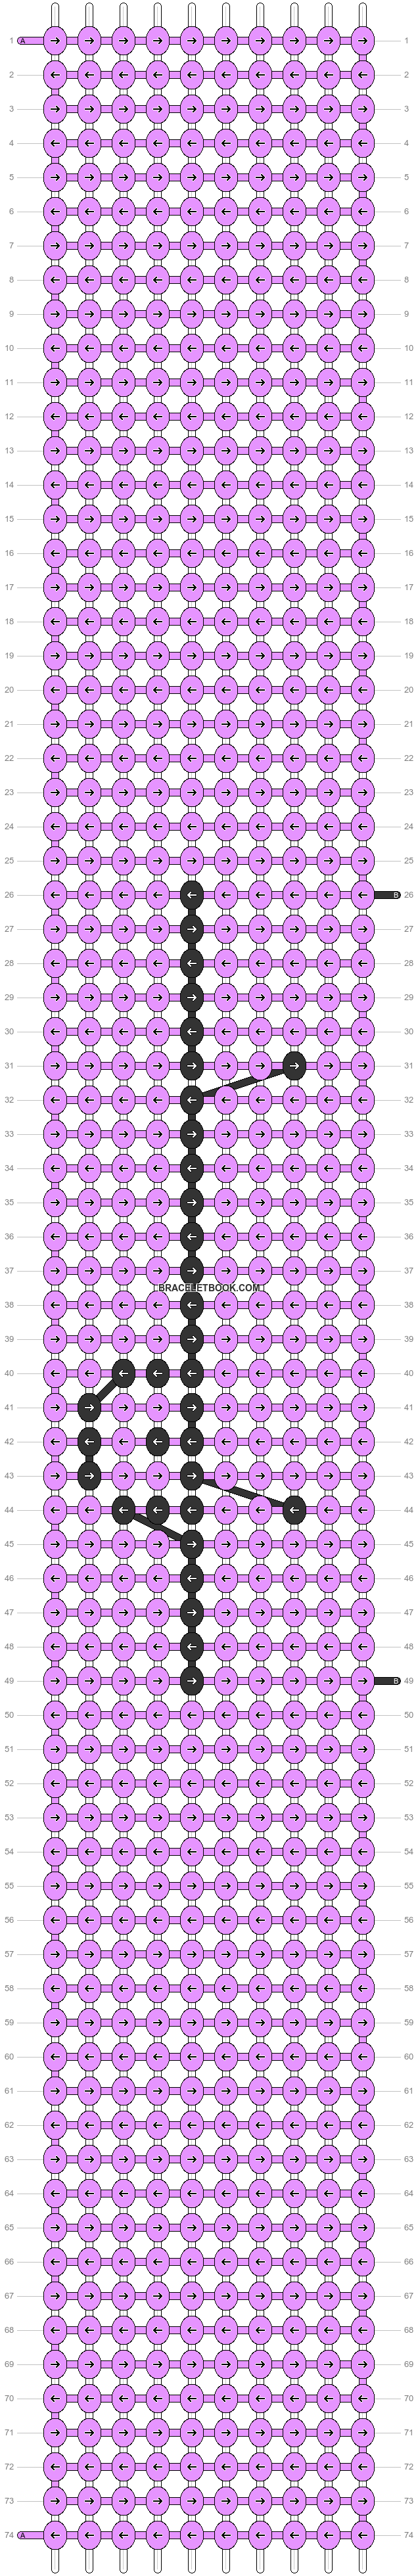 Alpha pattern #49305 variation #79115 pattern